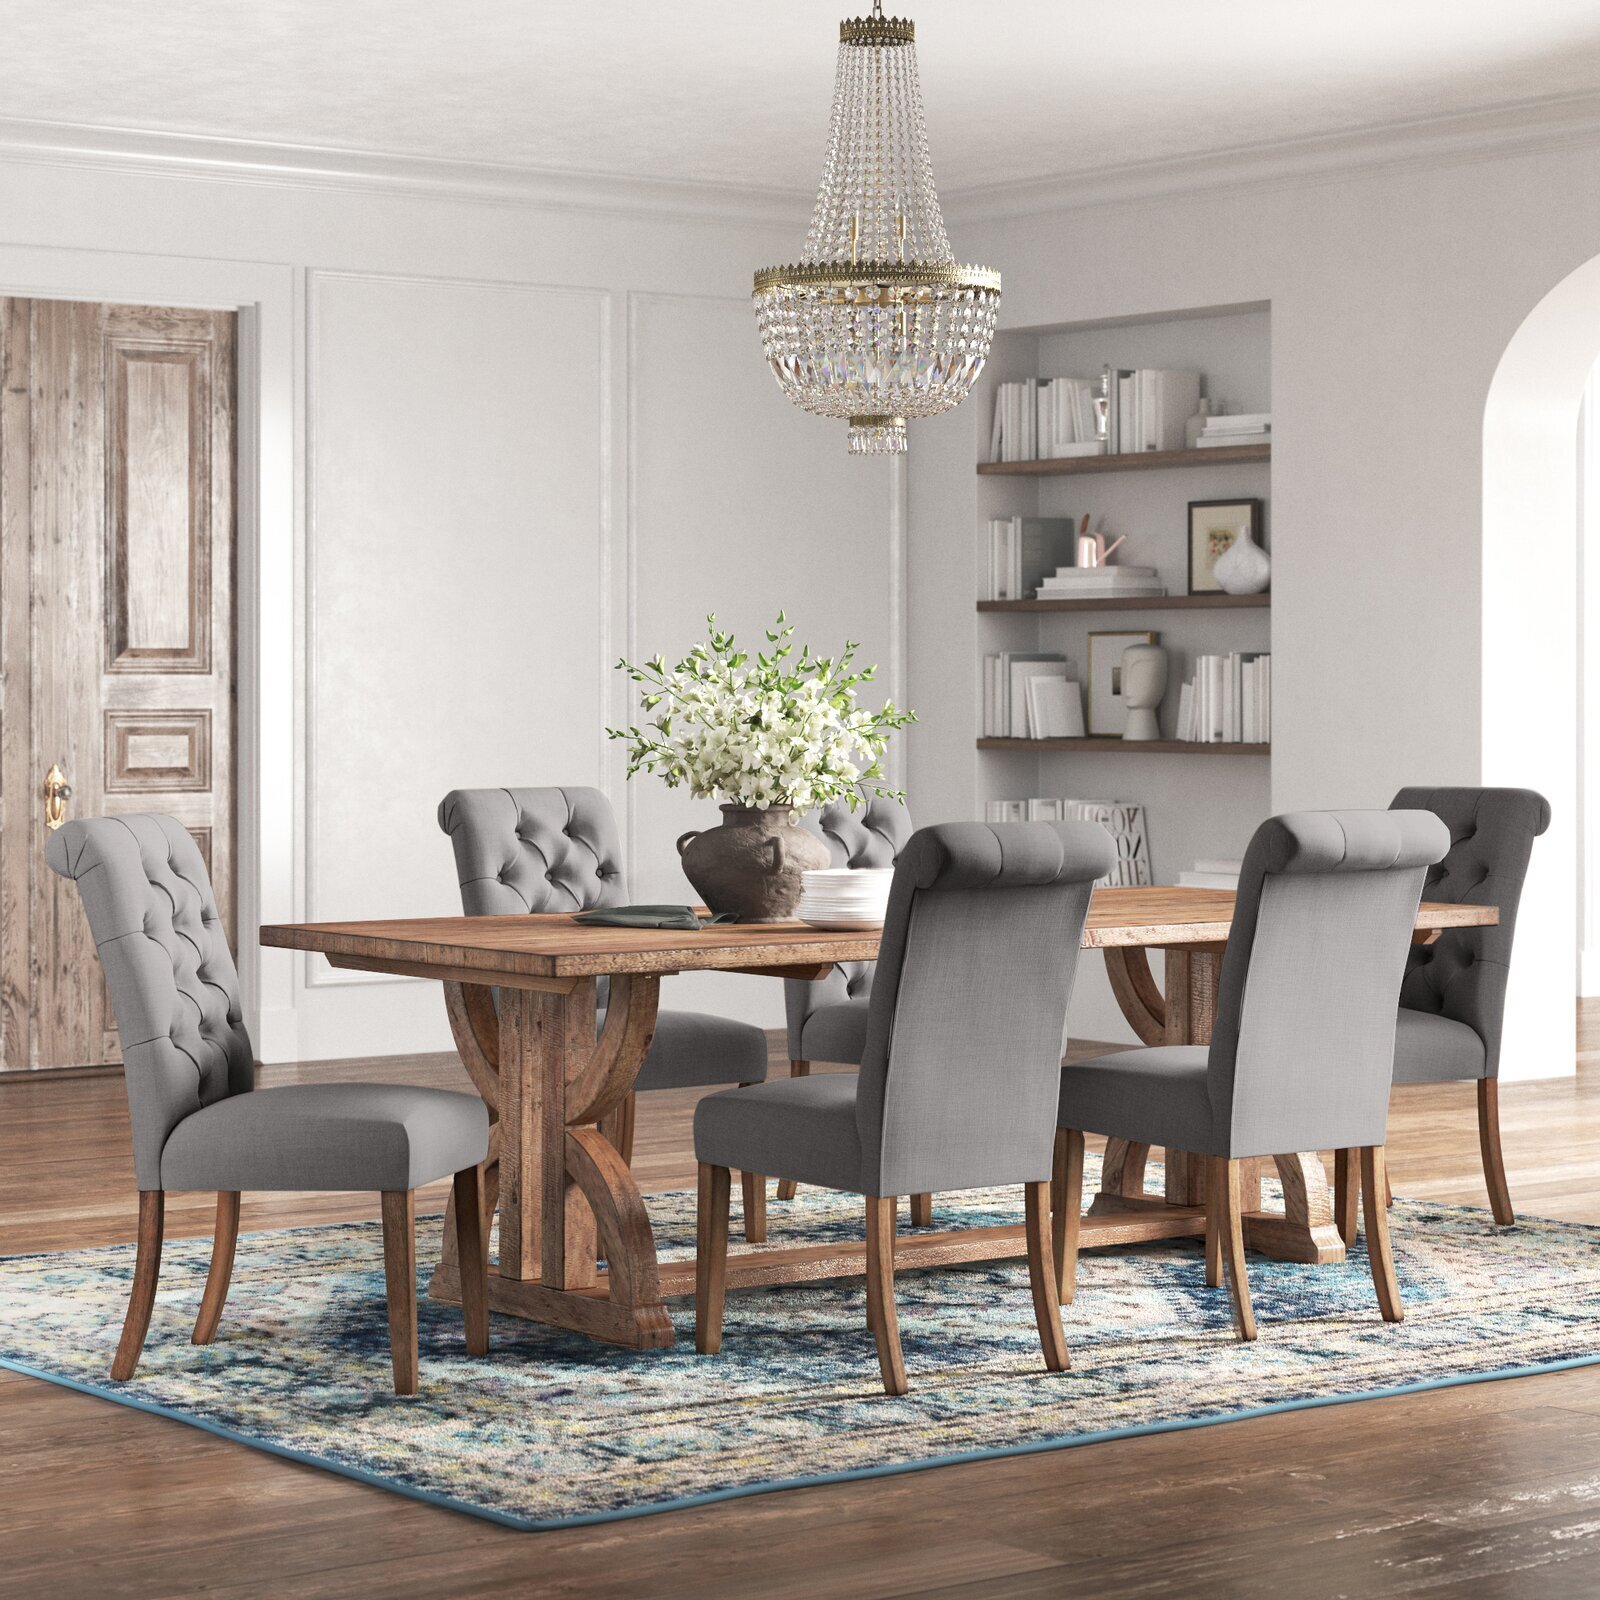 Lattice Farmhouse Style Table and Chairs